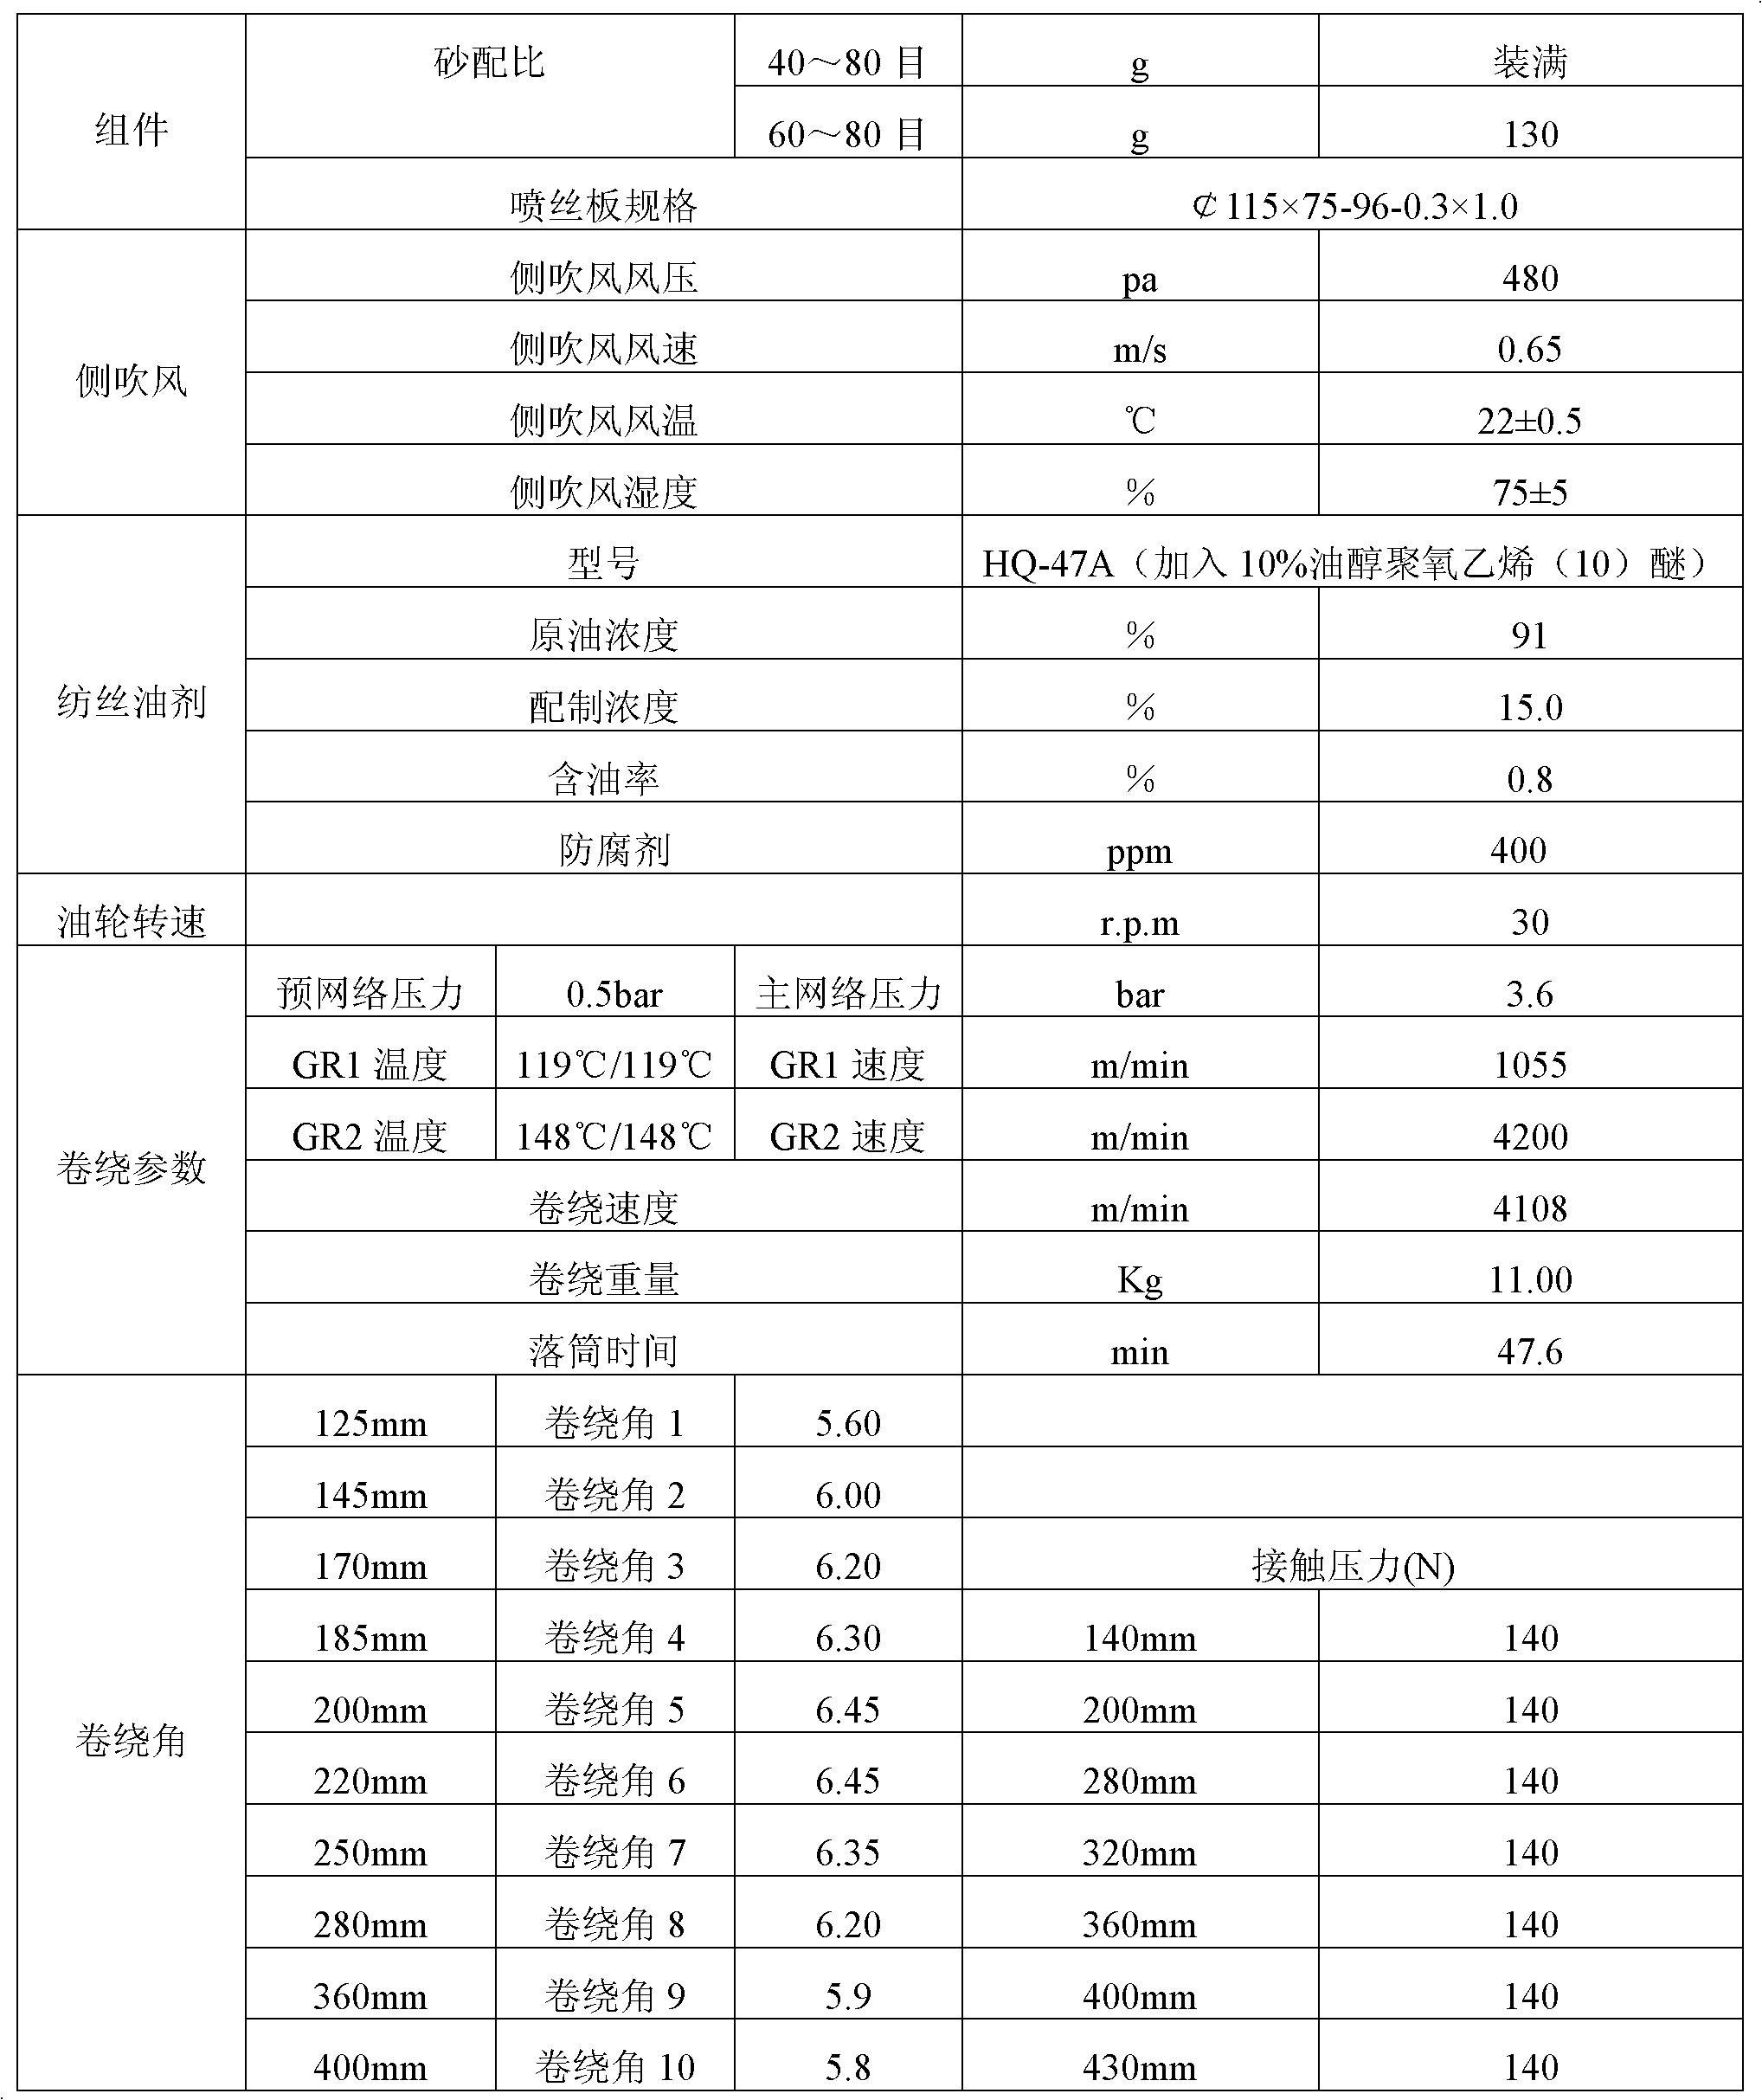 Intermediate-strength coarse-denier dacron FDY (Fully drawn yarn) and method for producing same